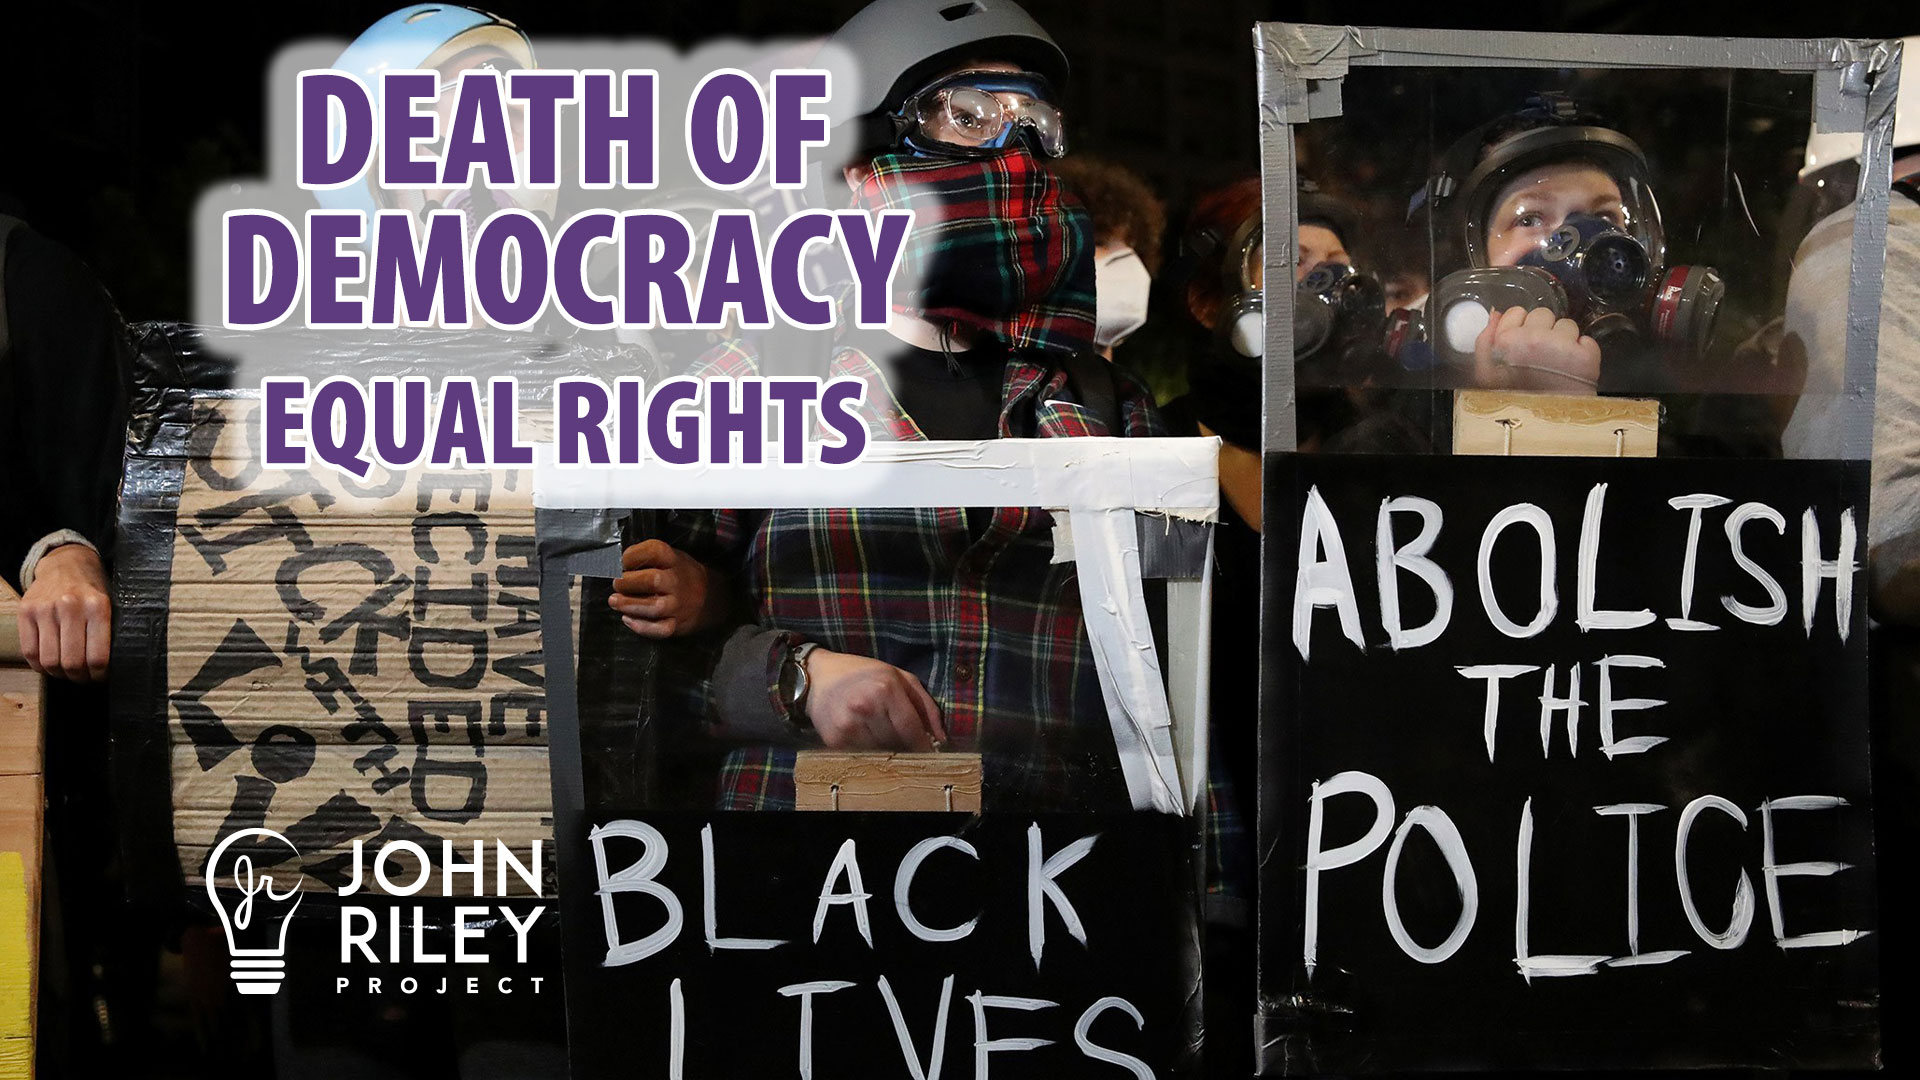 kenosha, portland, black lives matter, death of democracy, john riley project, JRP0155